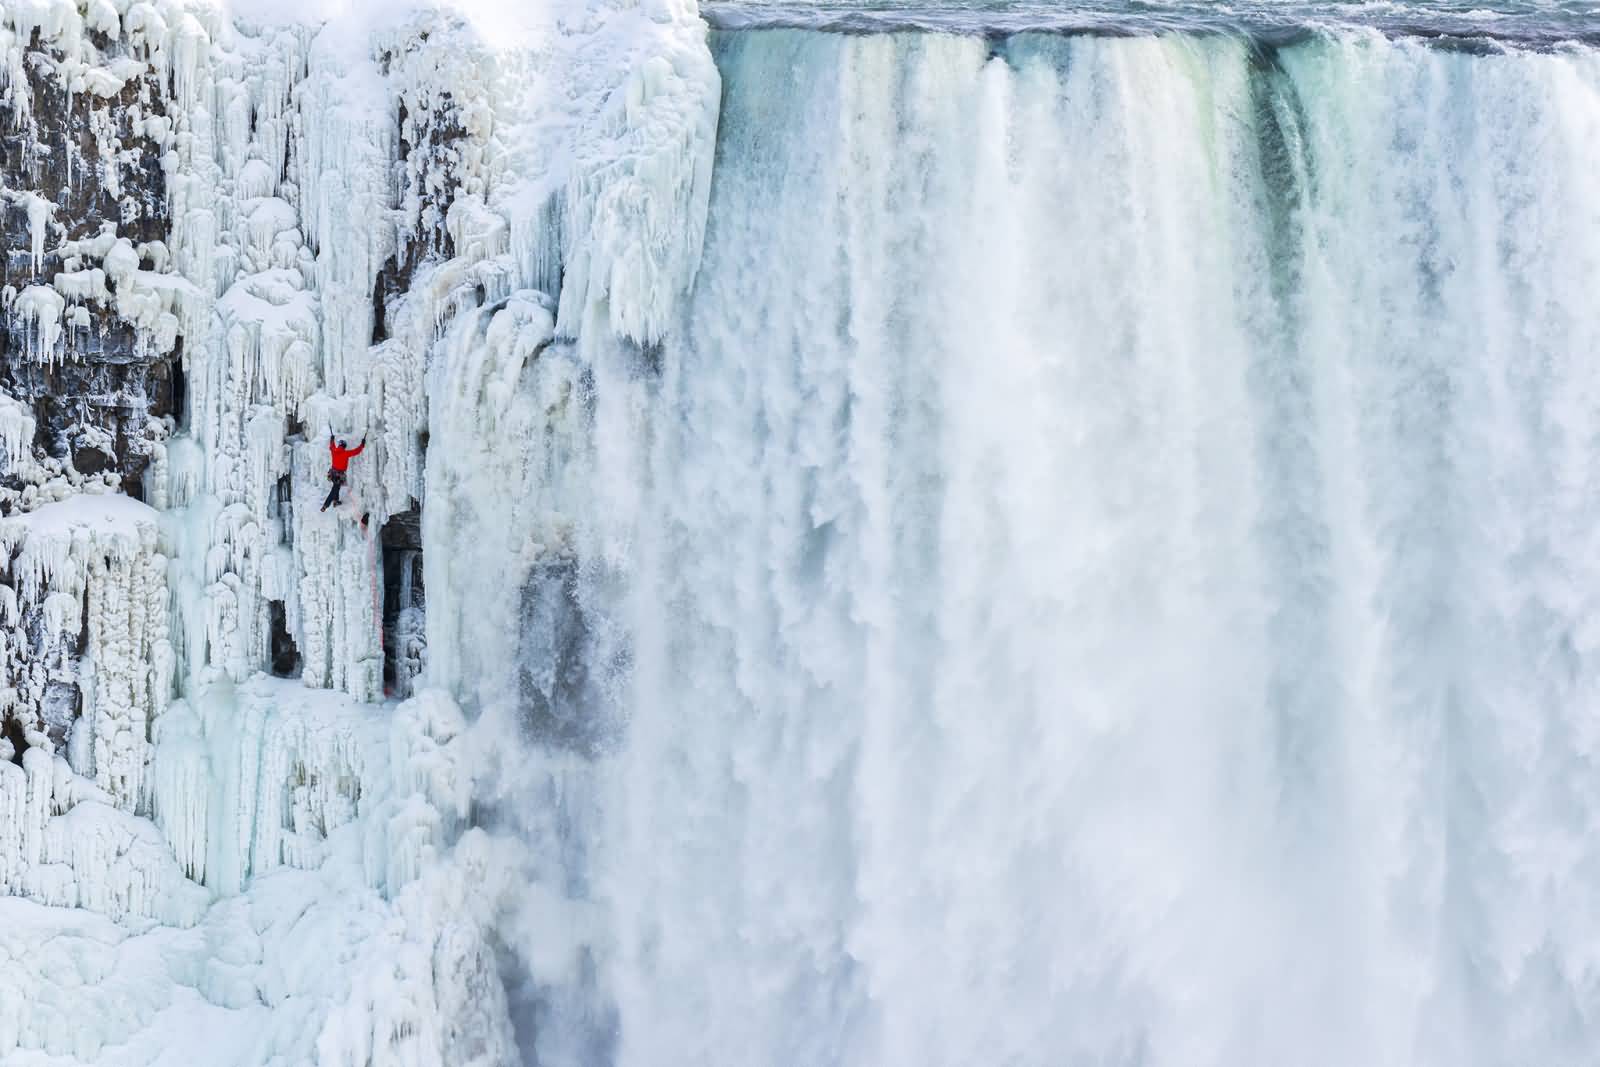 Will Gadd Climbs Near The Niagara Falls In Canada